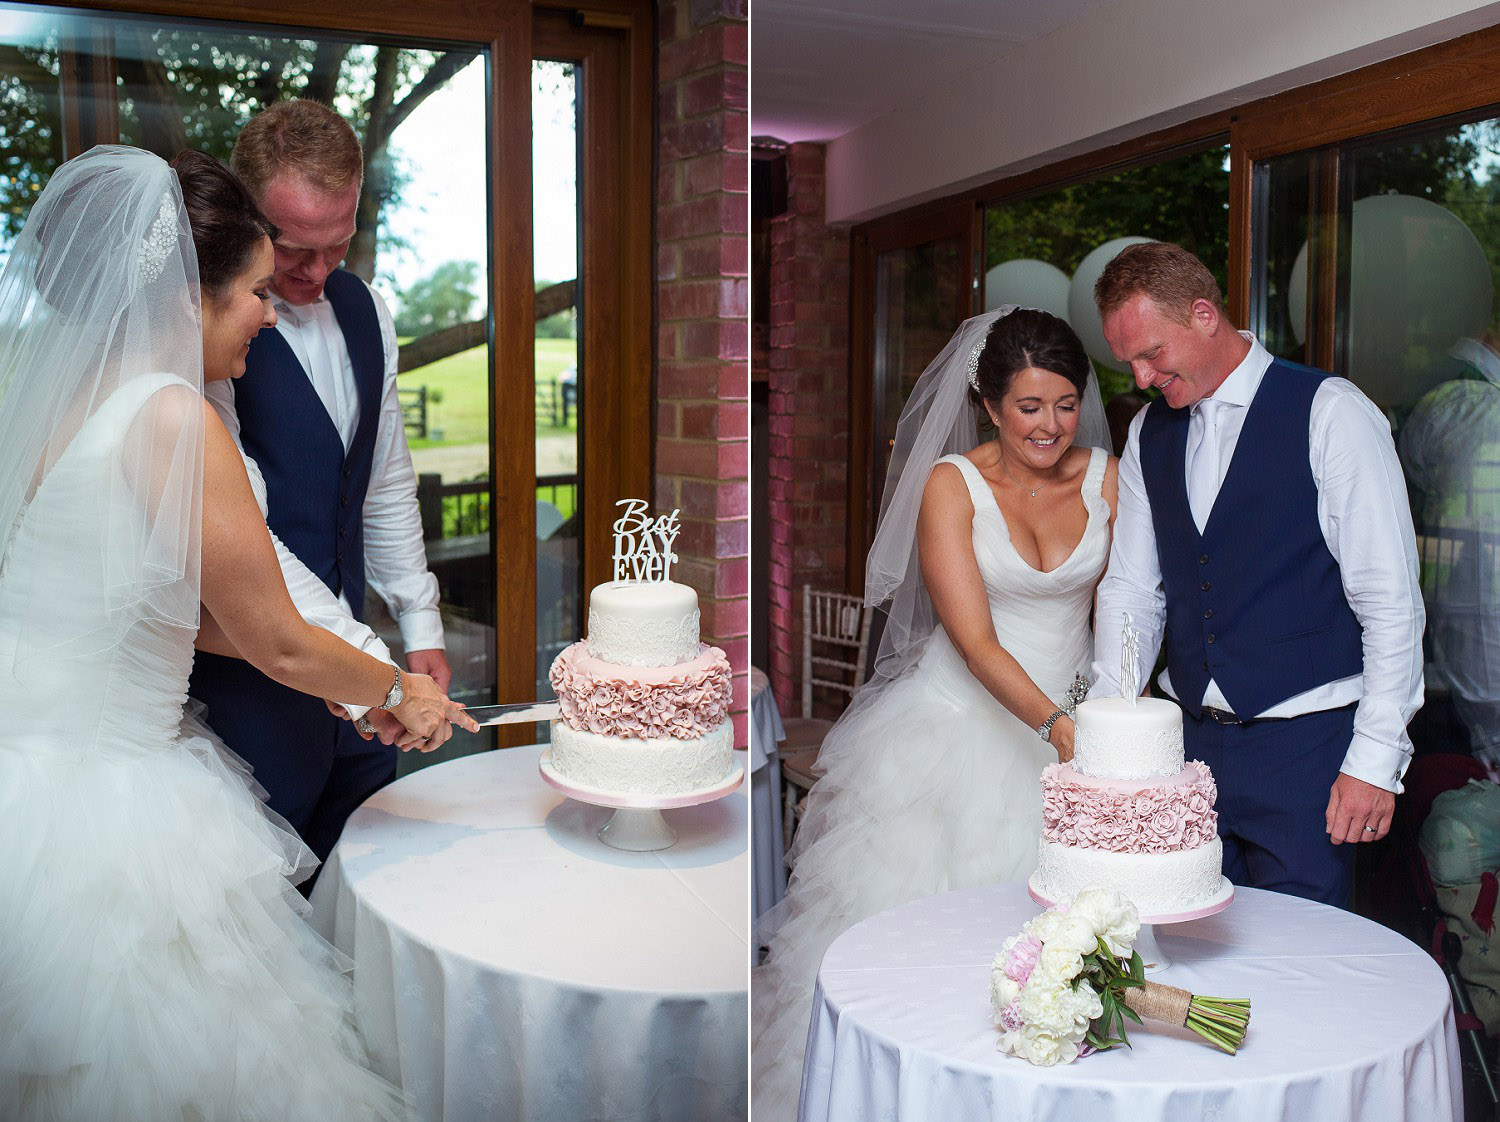 Wedding at Old Brook Barn - Cake Cutting